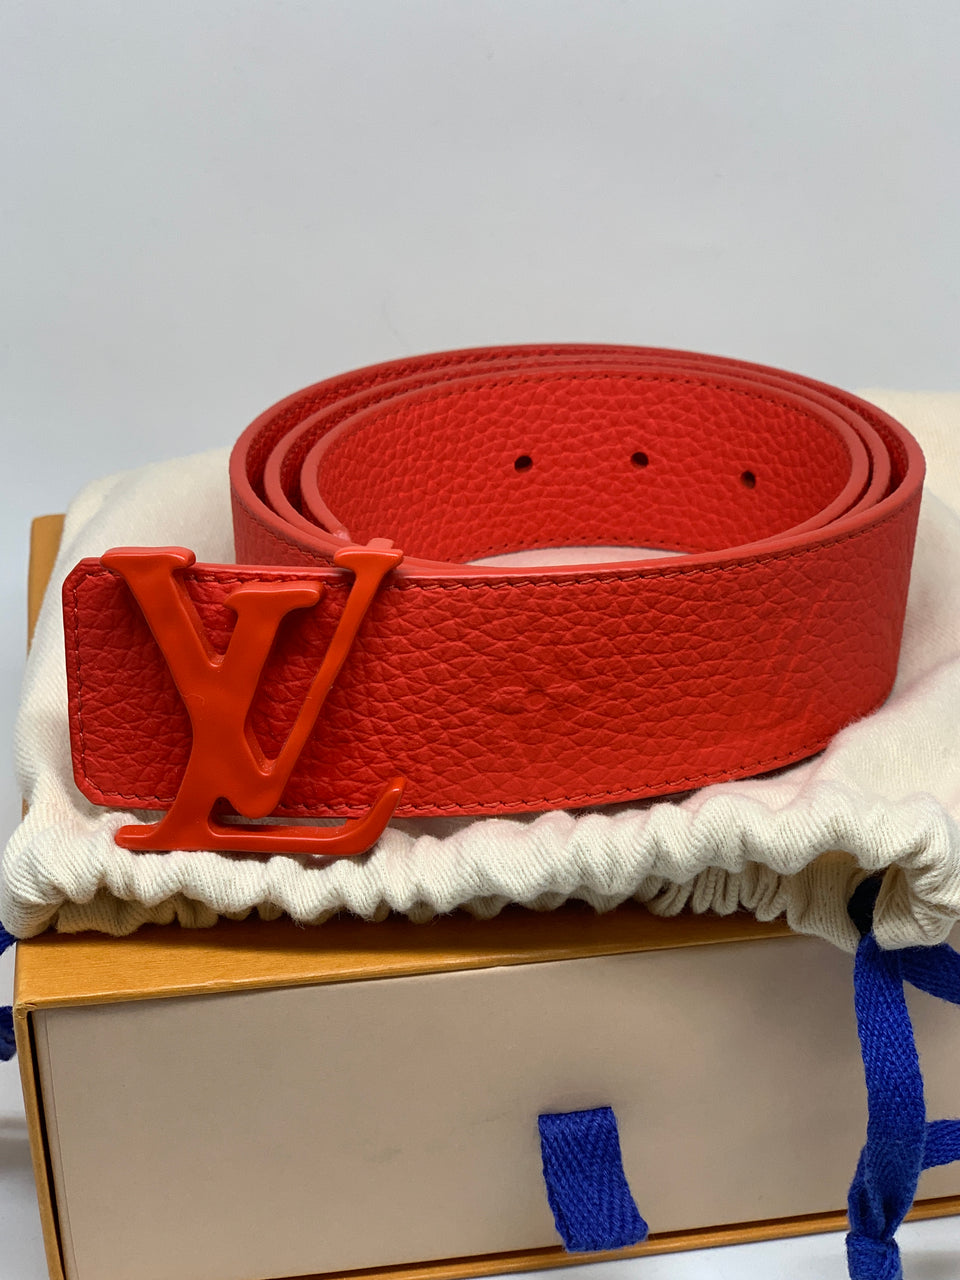 Sell Louis Vuitton X Virgil Abloh SS19 Monogram Belt - Red